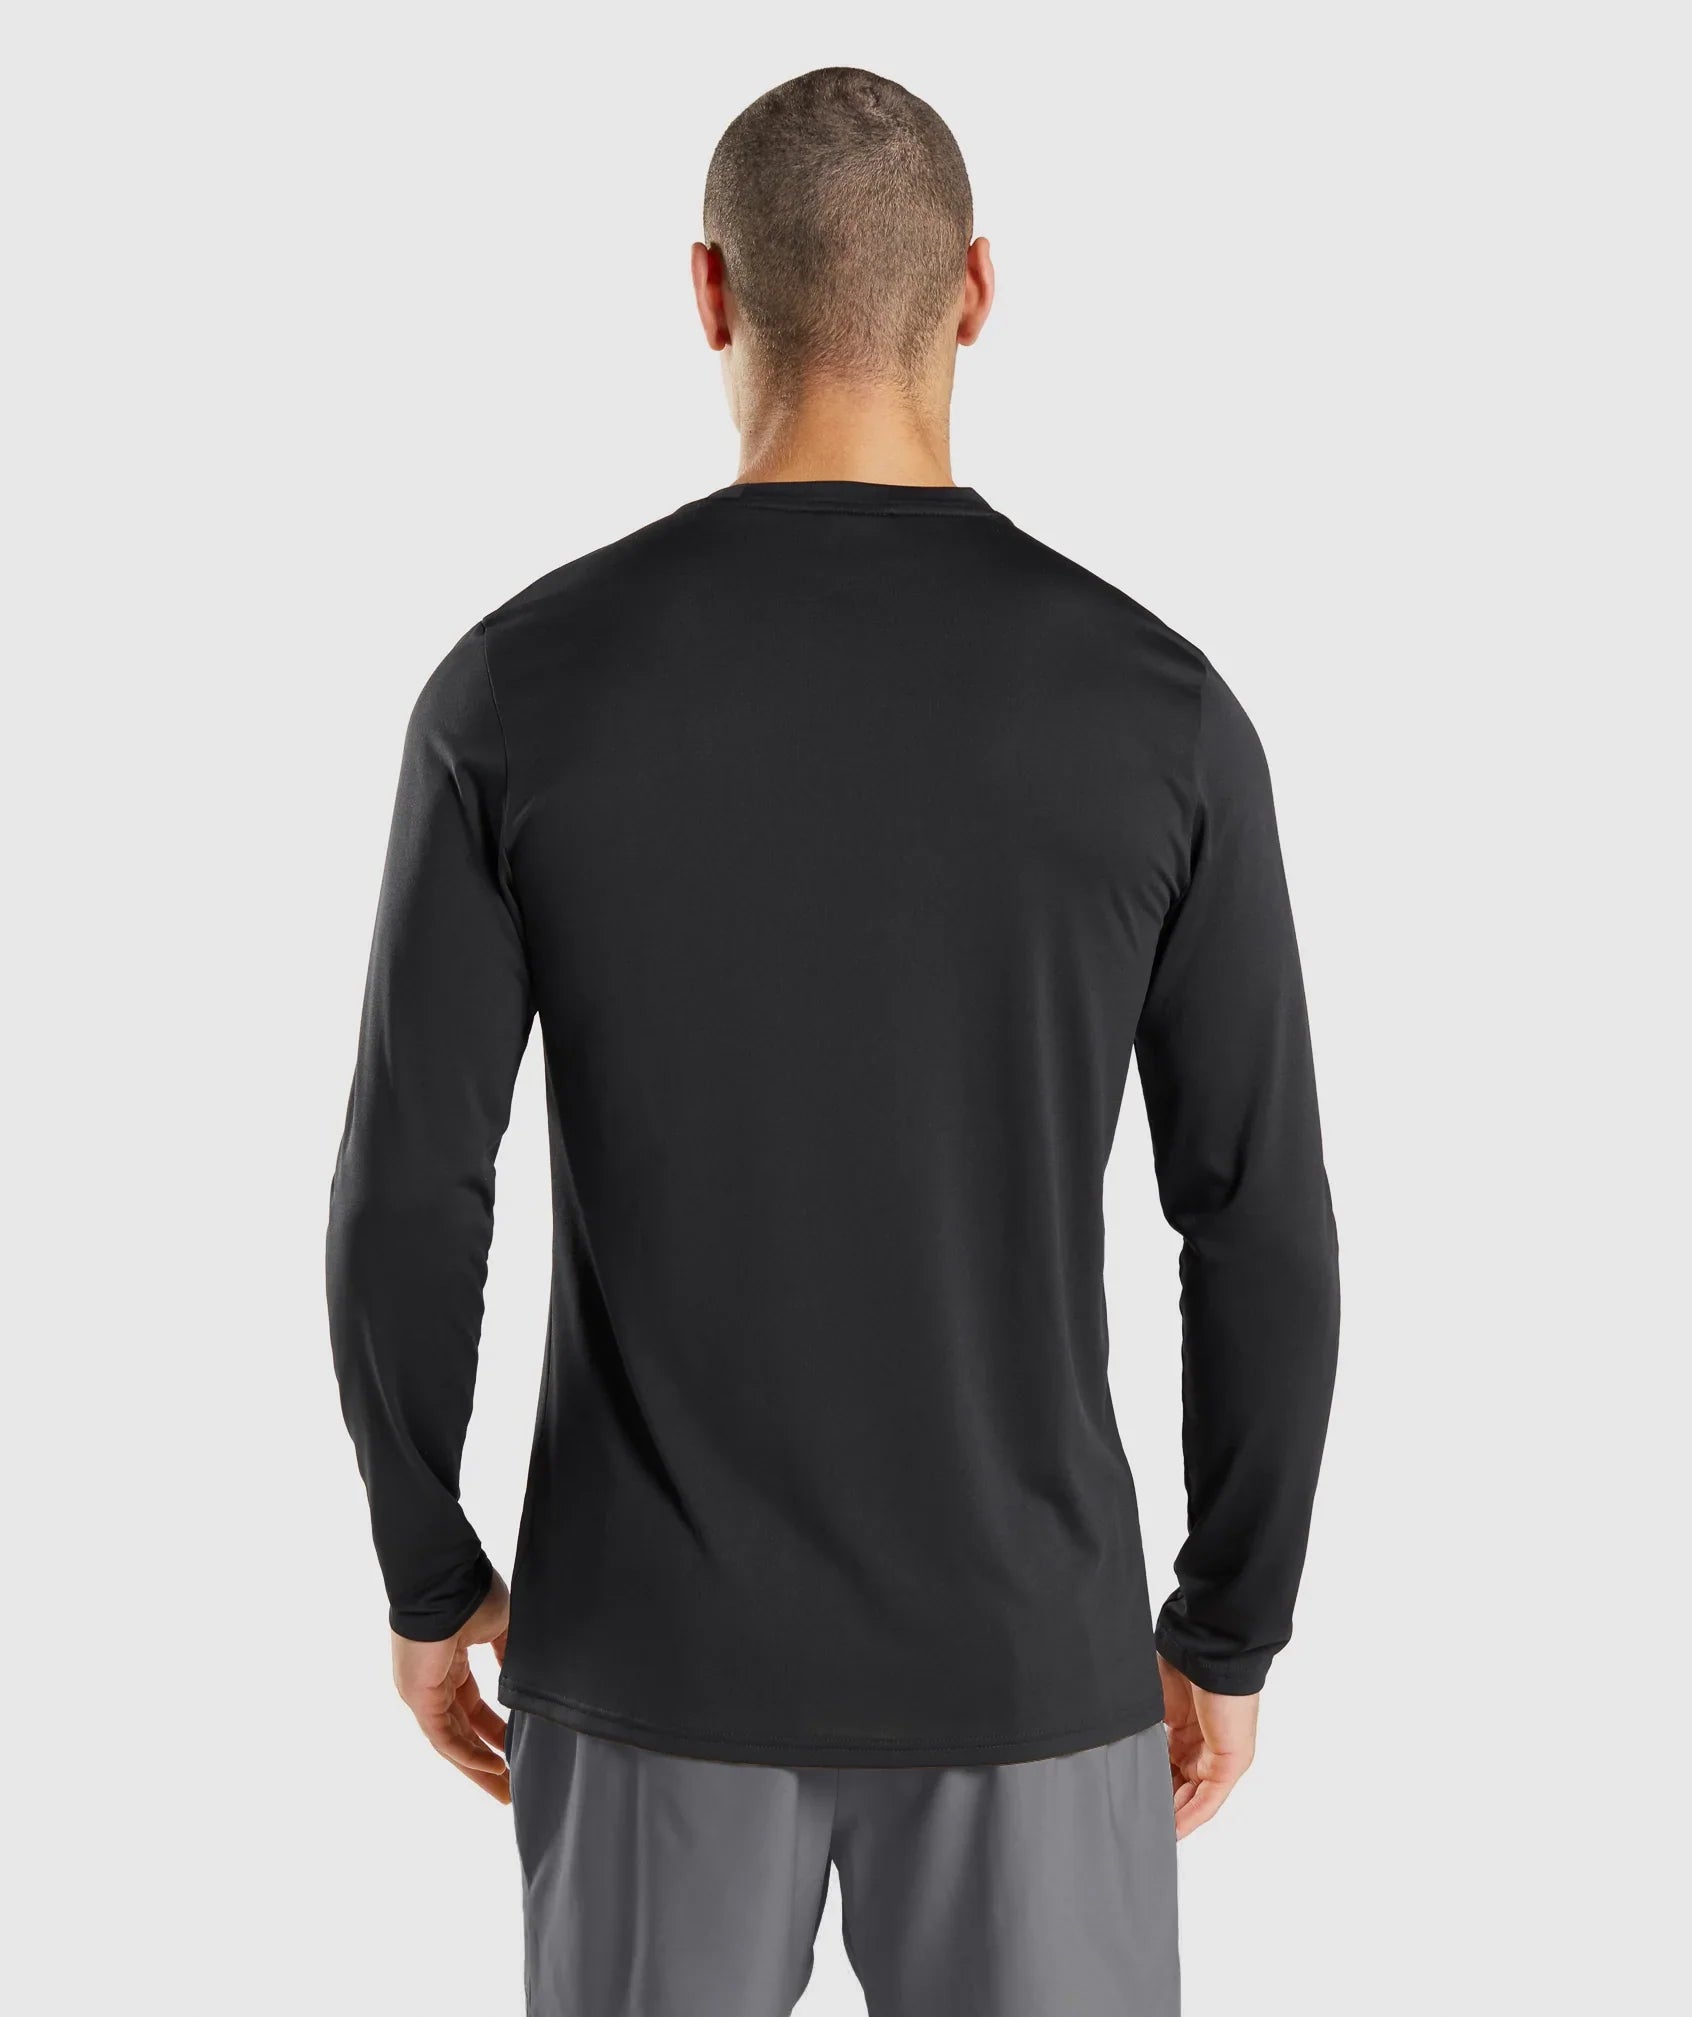 Gymshark Crest Long Sleeve T-Shirt - Black | Gymshark